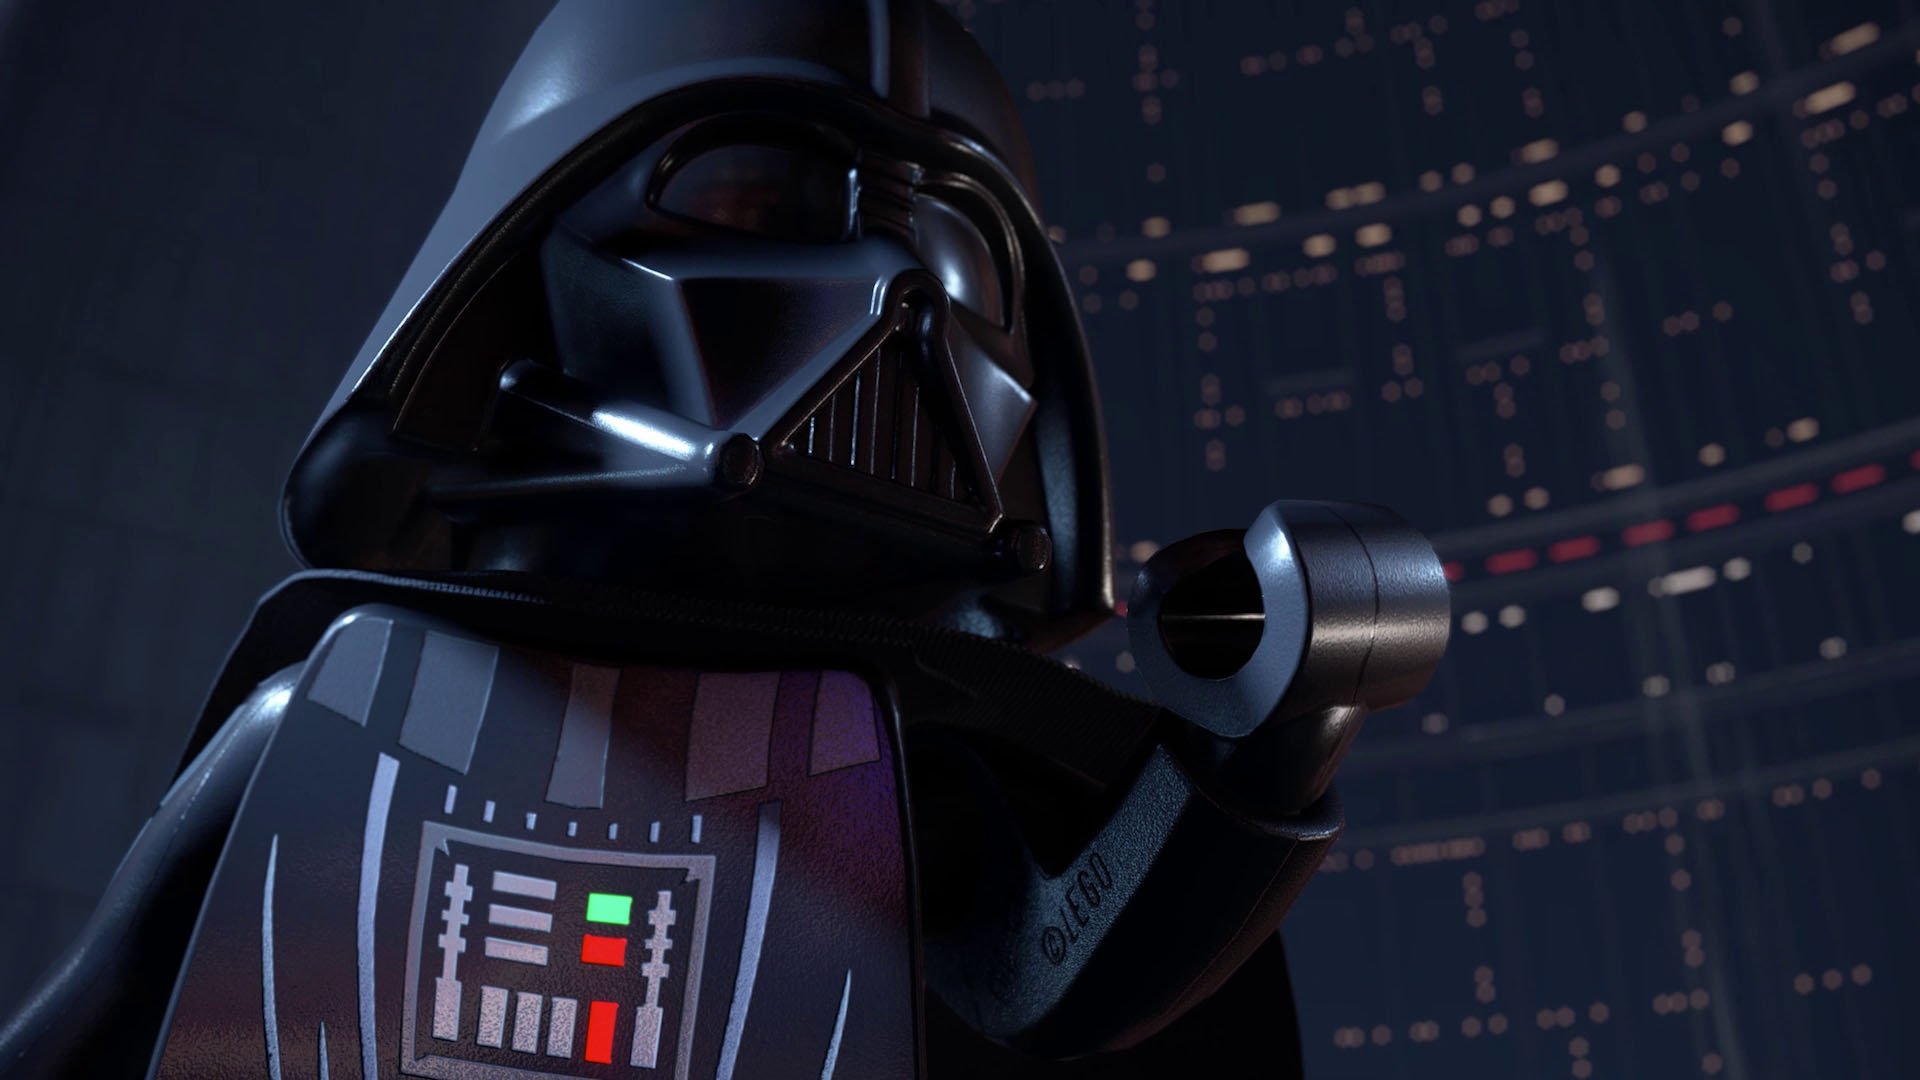 LEGO Star Wars: The Skywalker Saga's Co-op is Crazy 